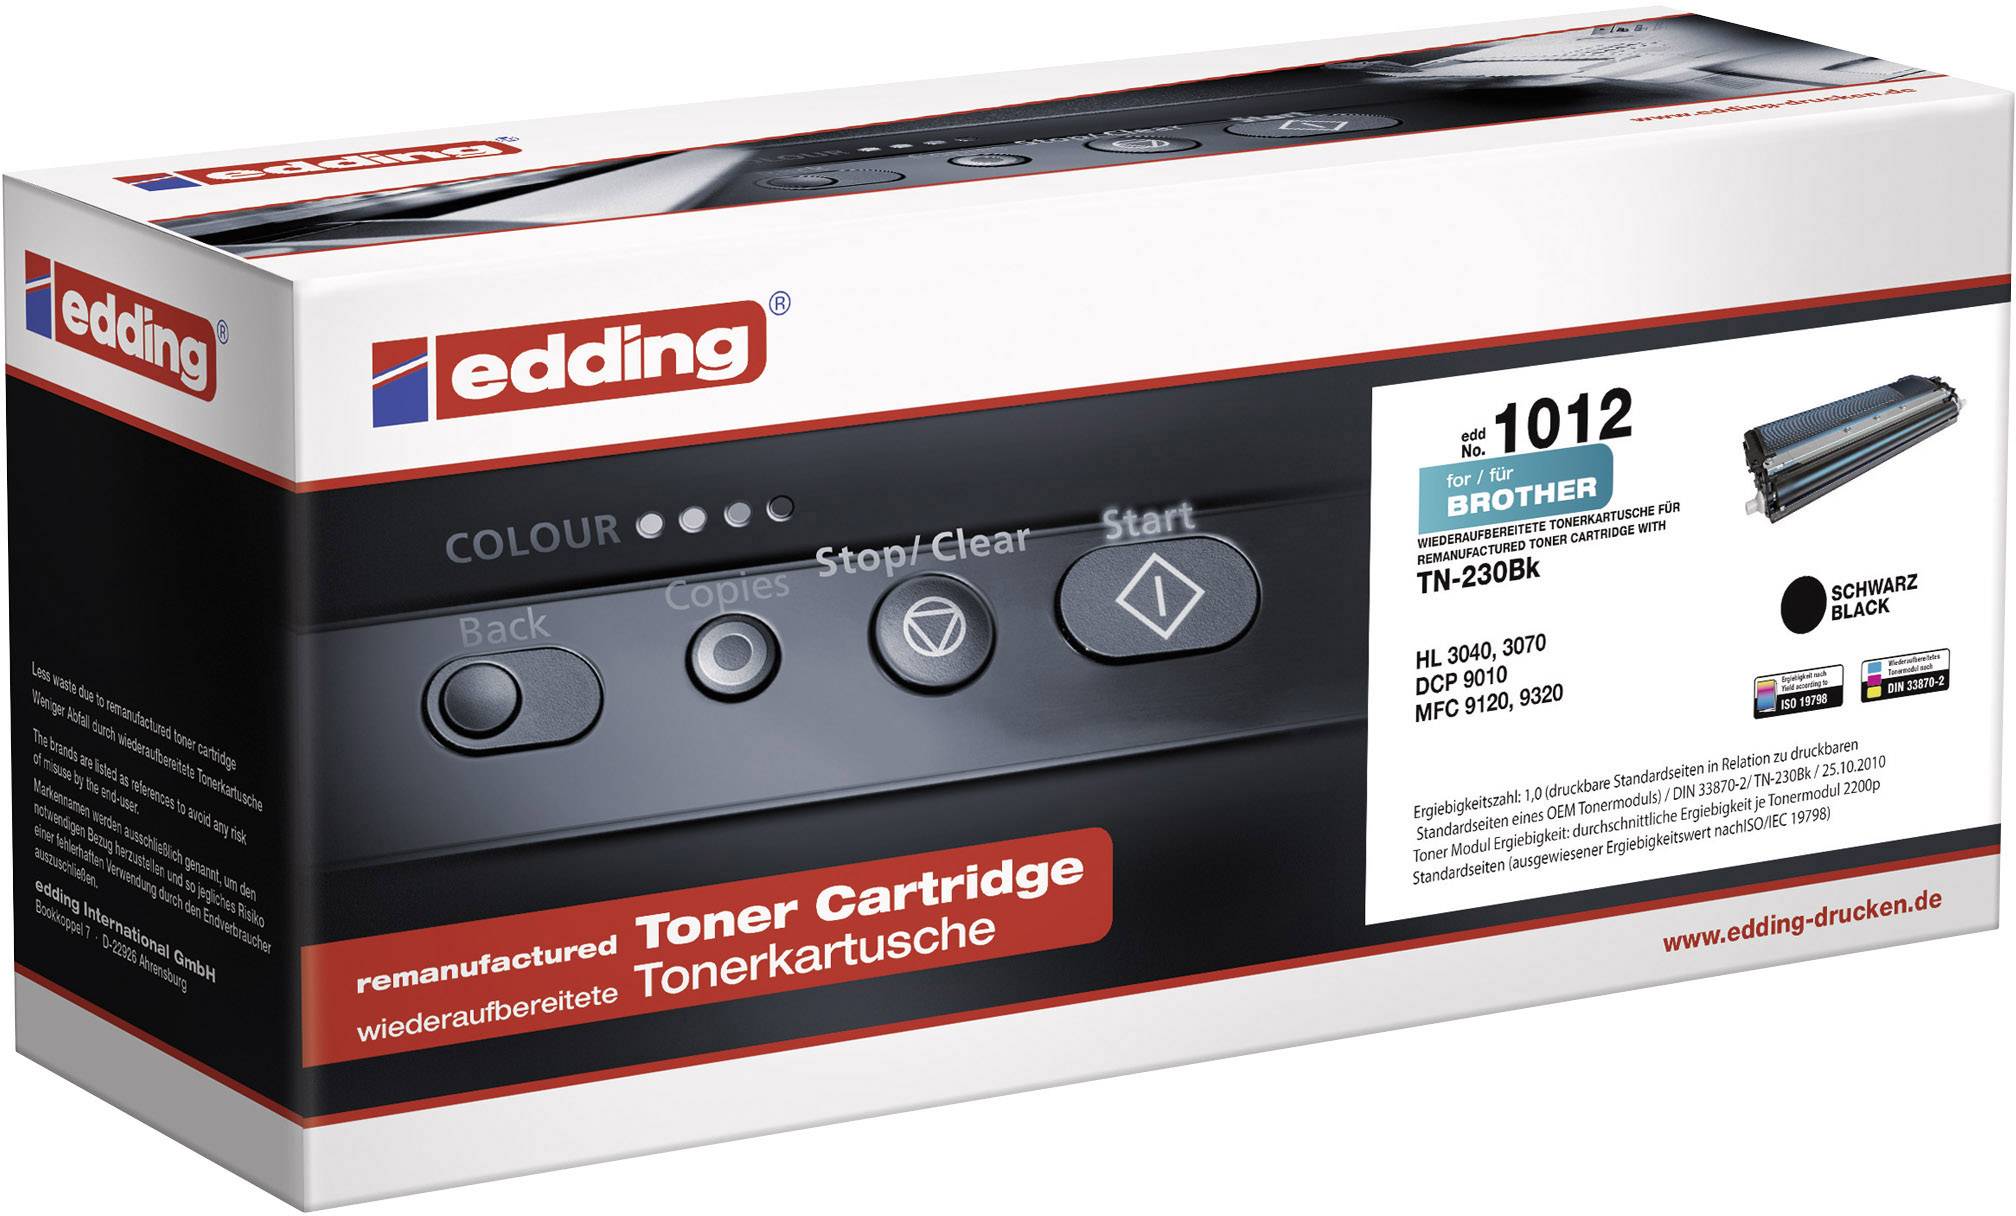 EDDING Toner ersetzt Brother TN-230BK, TN230BK Kompatibel Schwarz 2200 Seiten edding 1012